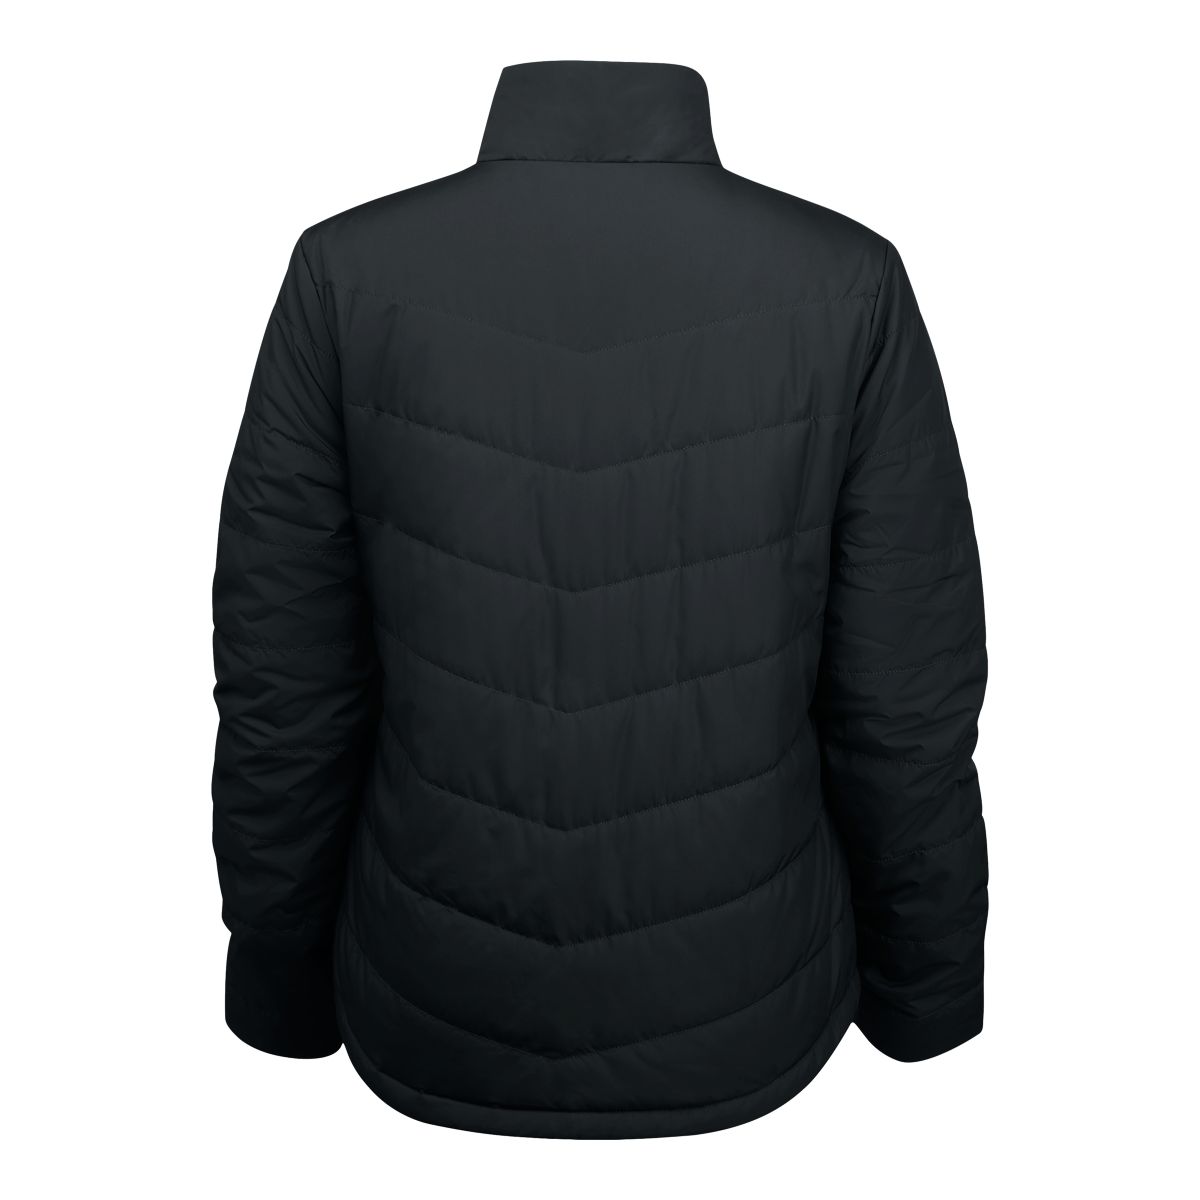 The North Face Women's Tamburello Midlayer Jacket, Insulated 